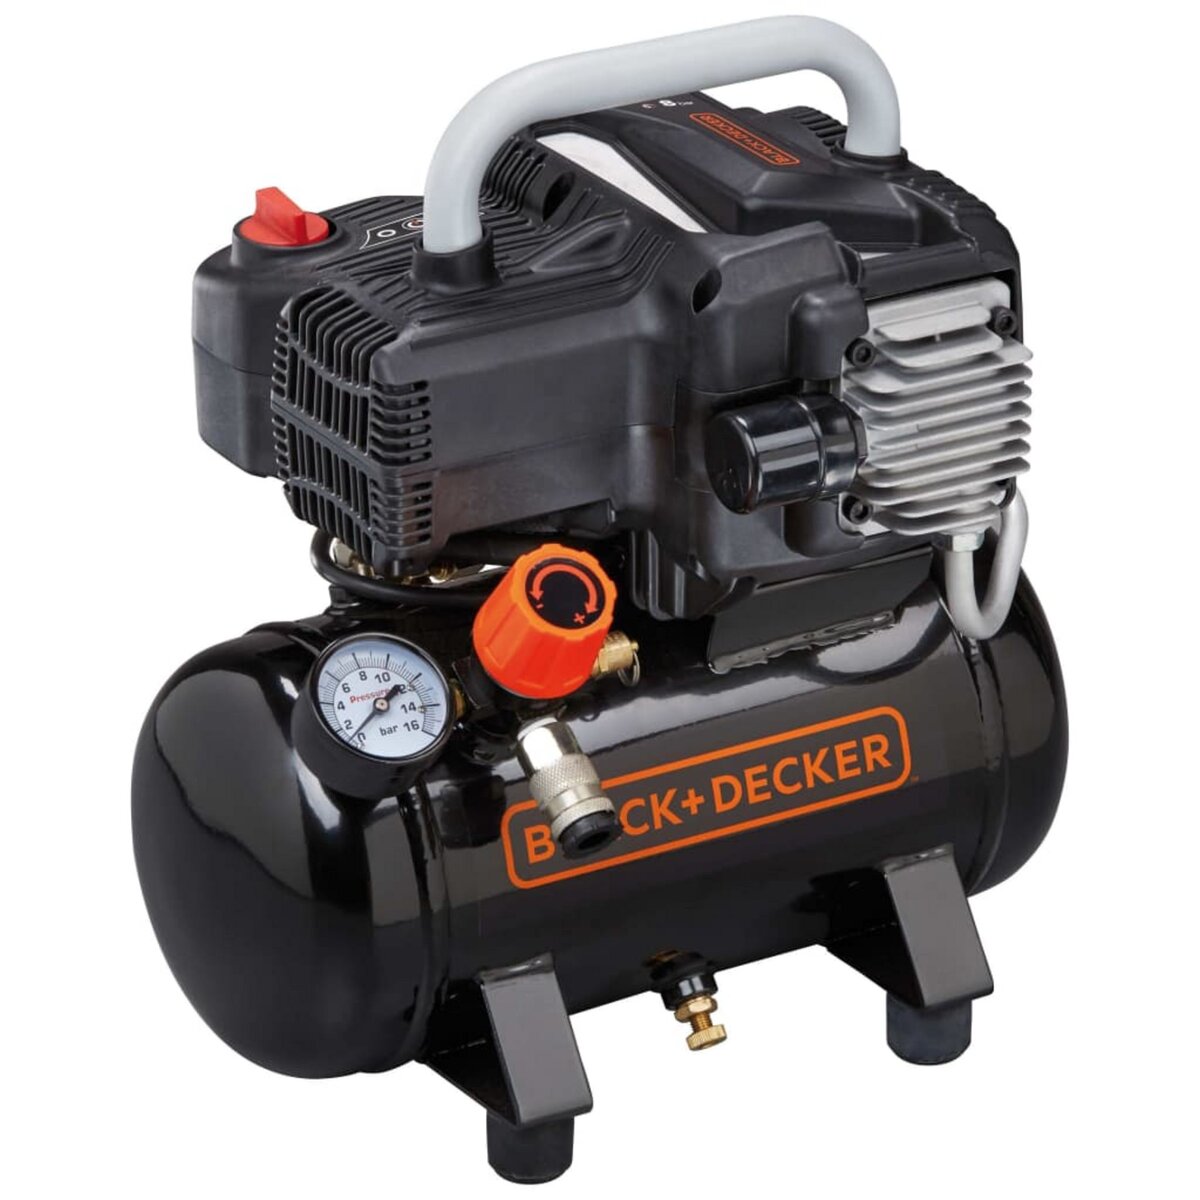 Black & Decker - BLACK+DECKER Compresseur à air silencieux 6 L 230